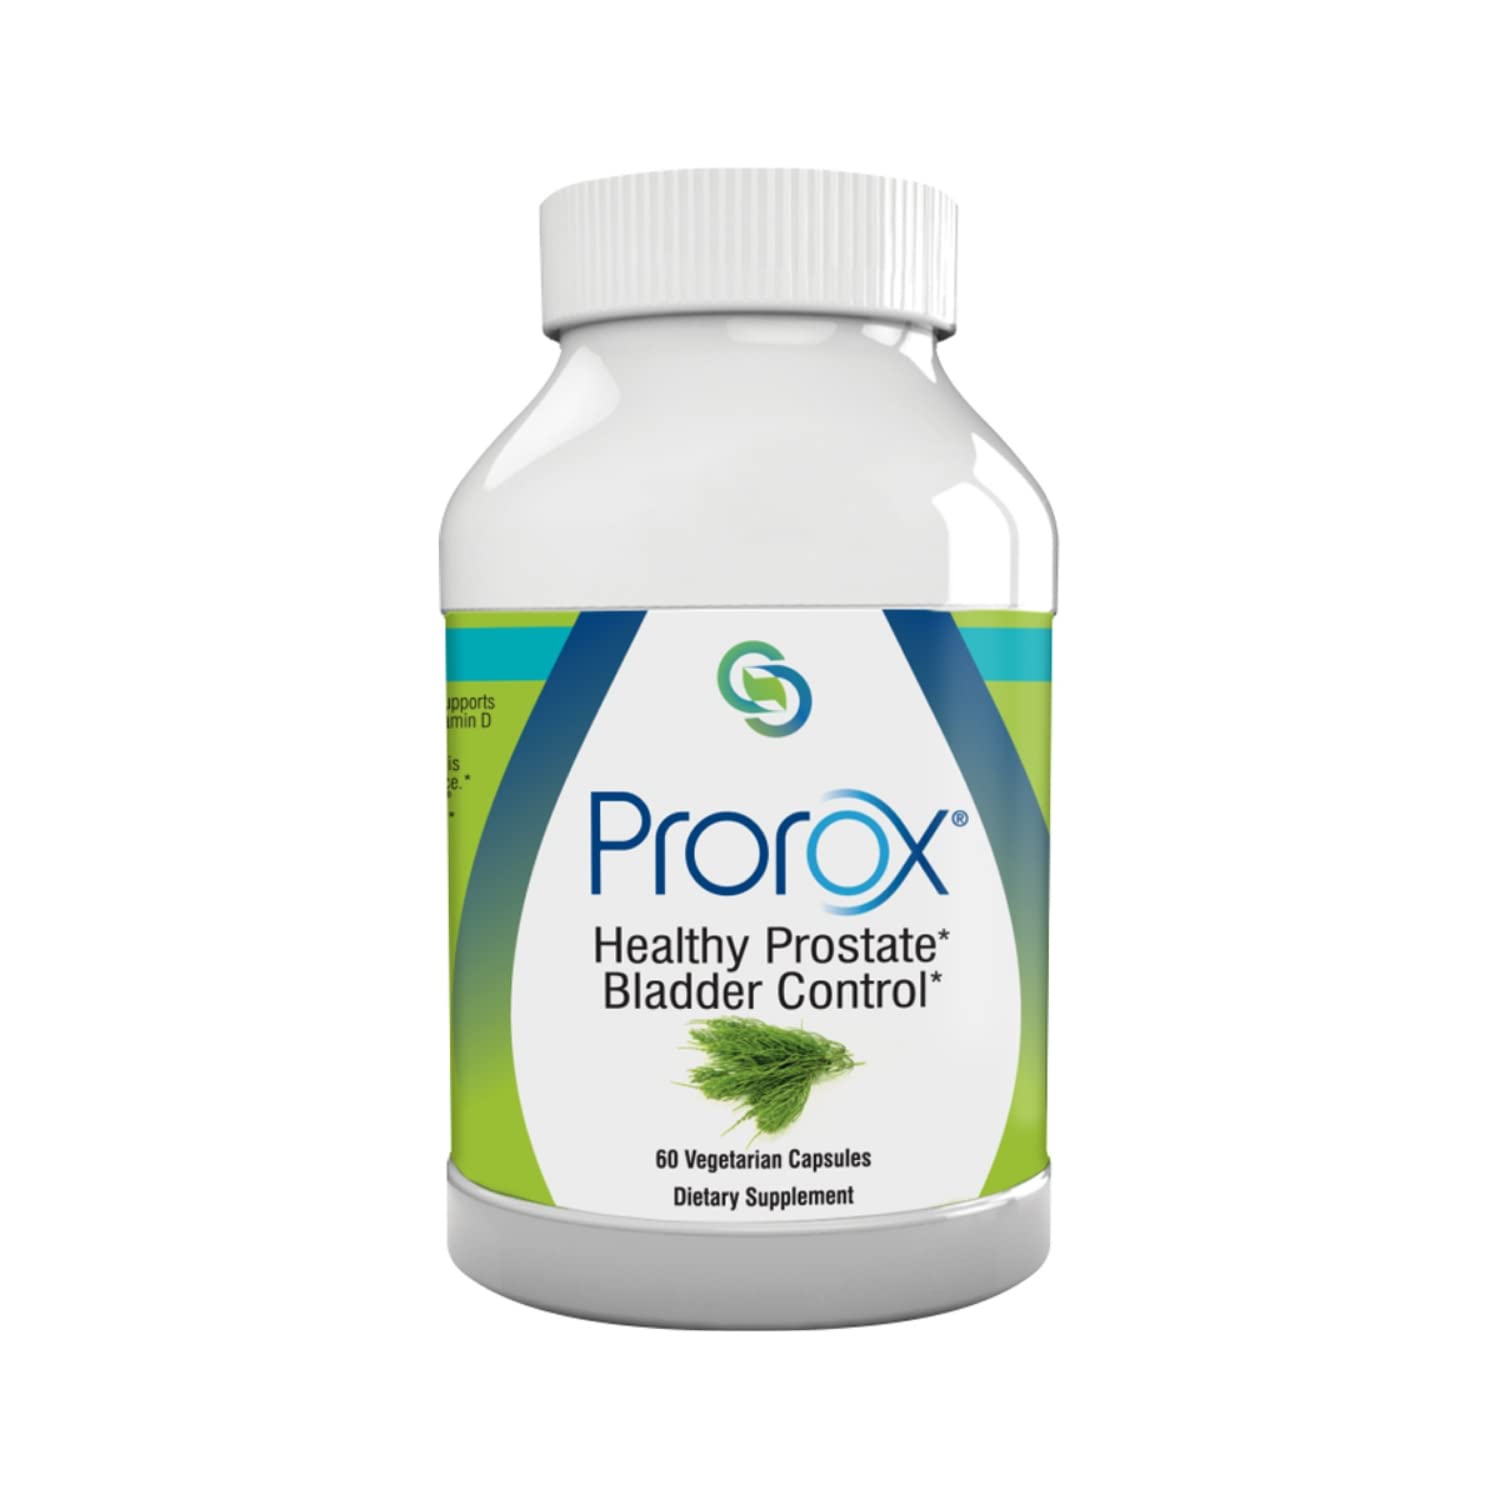 PROROX Healthy Prostate Bladder Control, Prostate Supplements for Men, Supports Healthy Prostate and Bladder Health, Contains Saw Palmetto, Reduces...